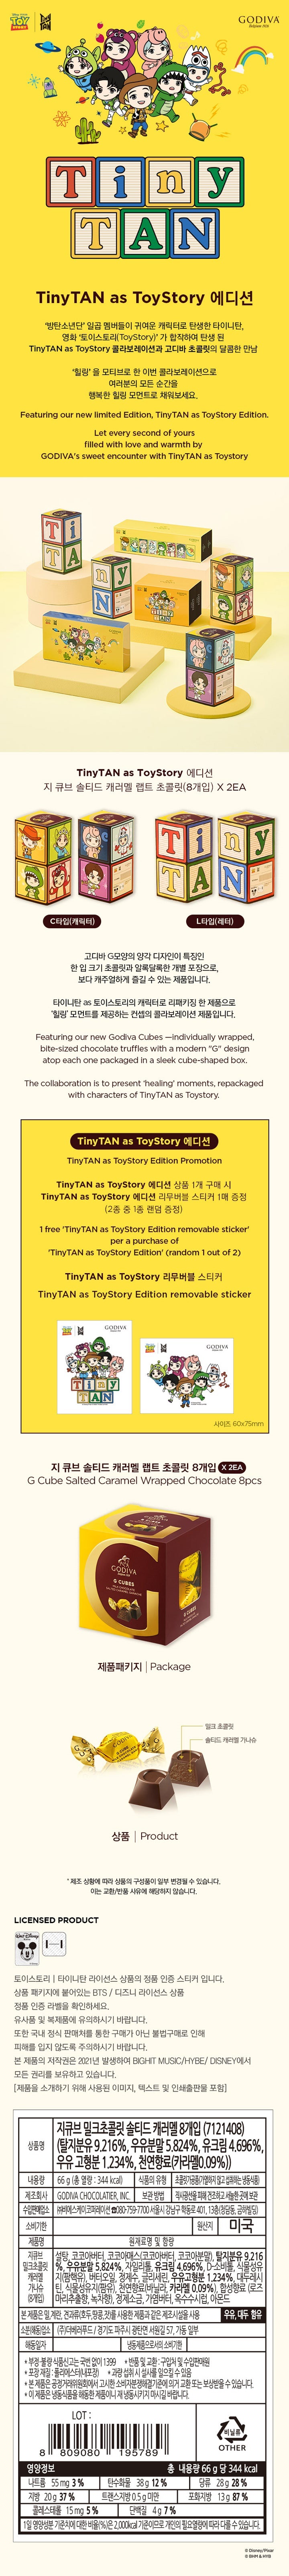 Buy TinyTan ToyStory now!